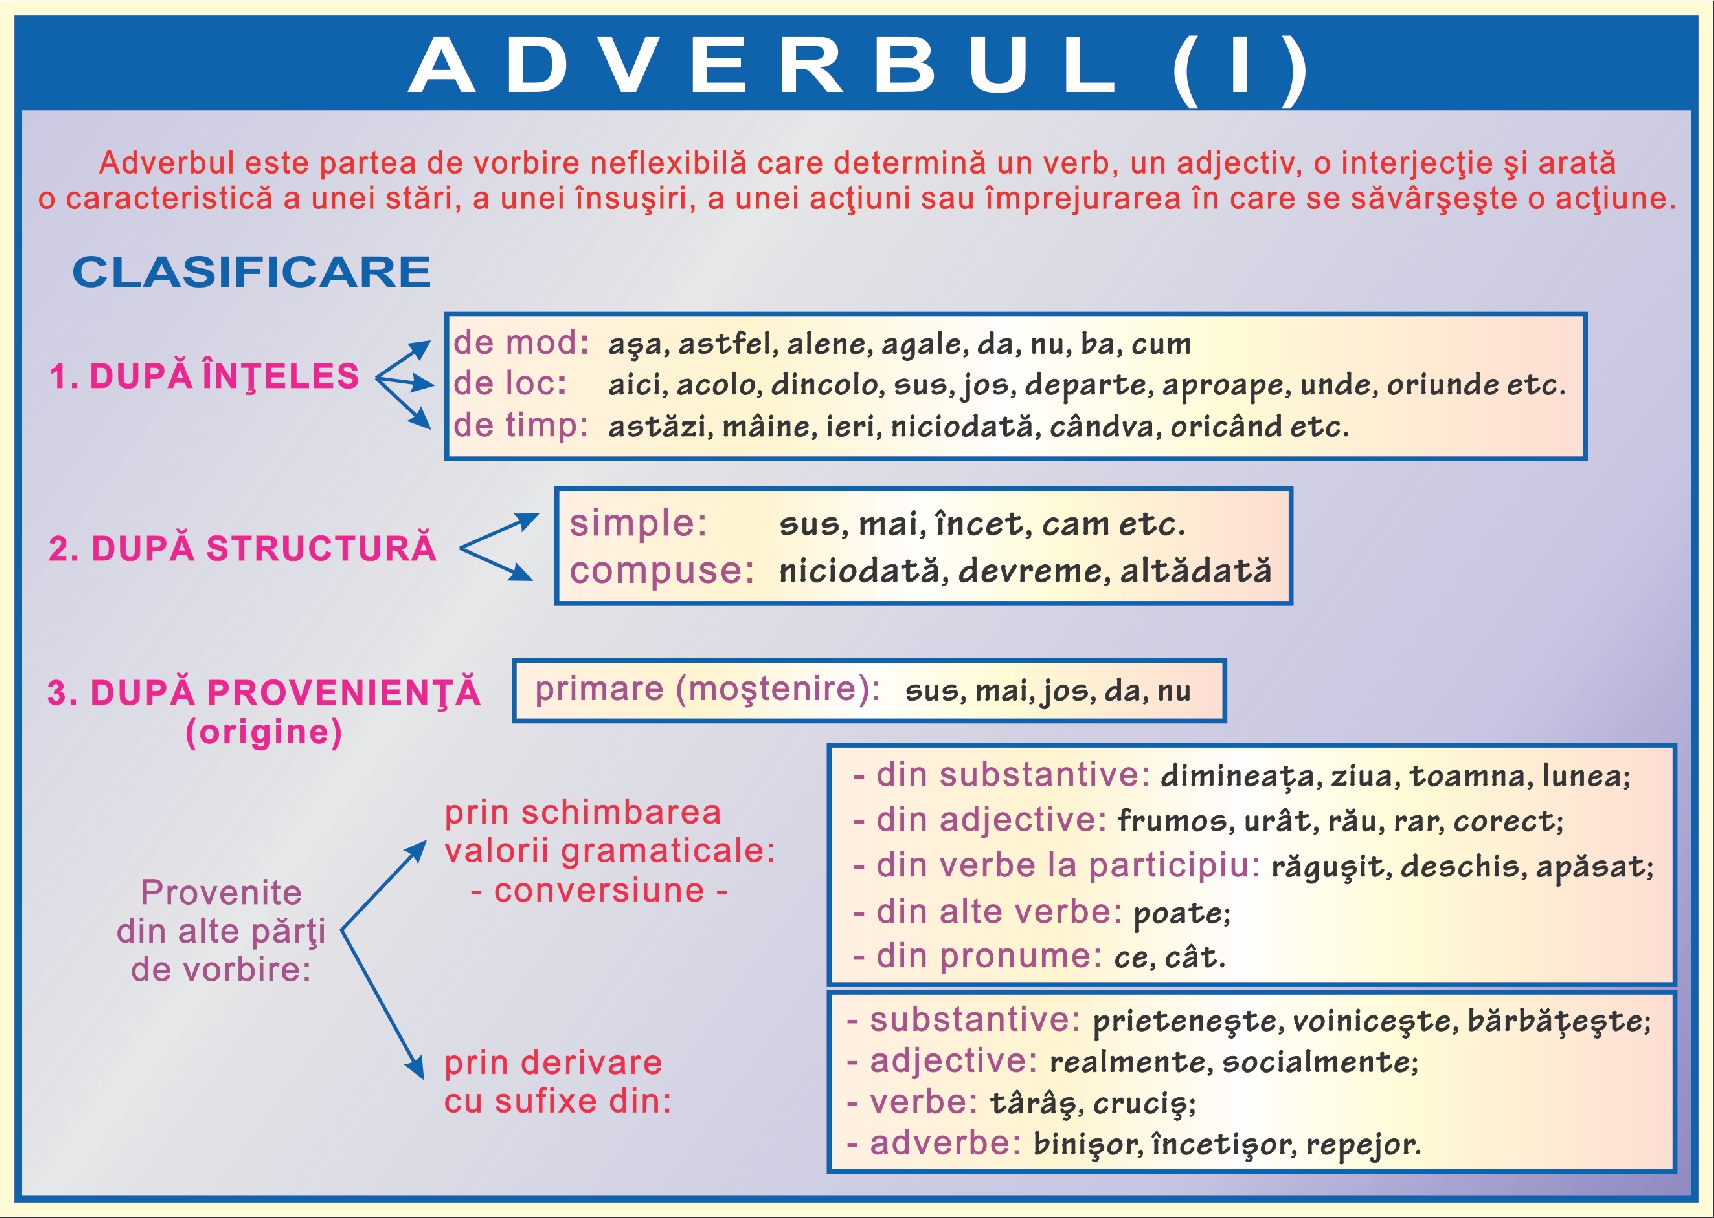 Adverbul